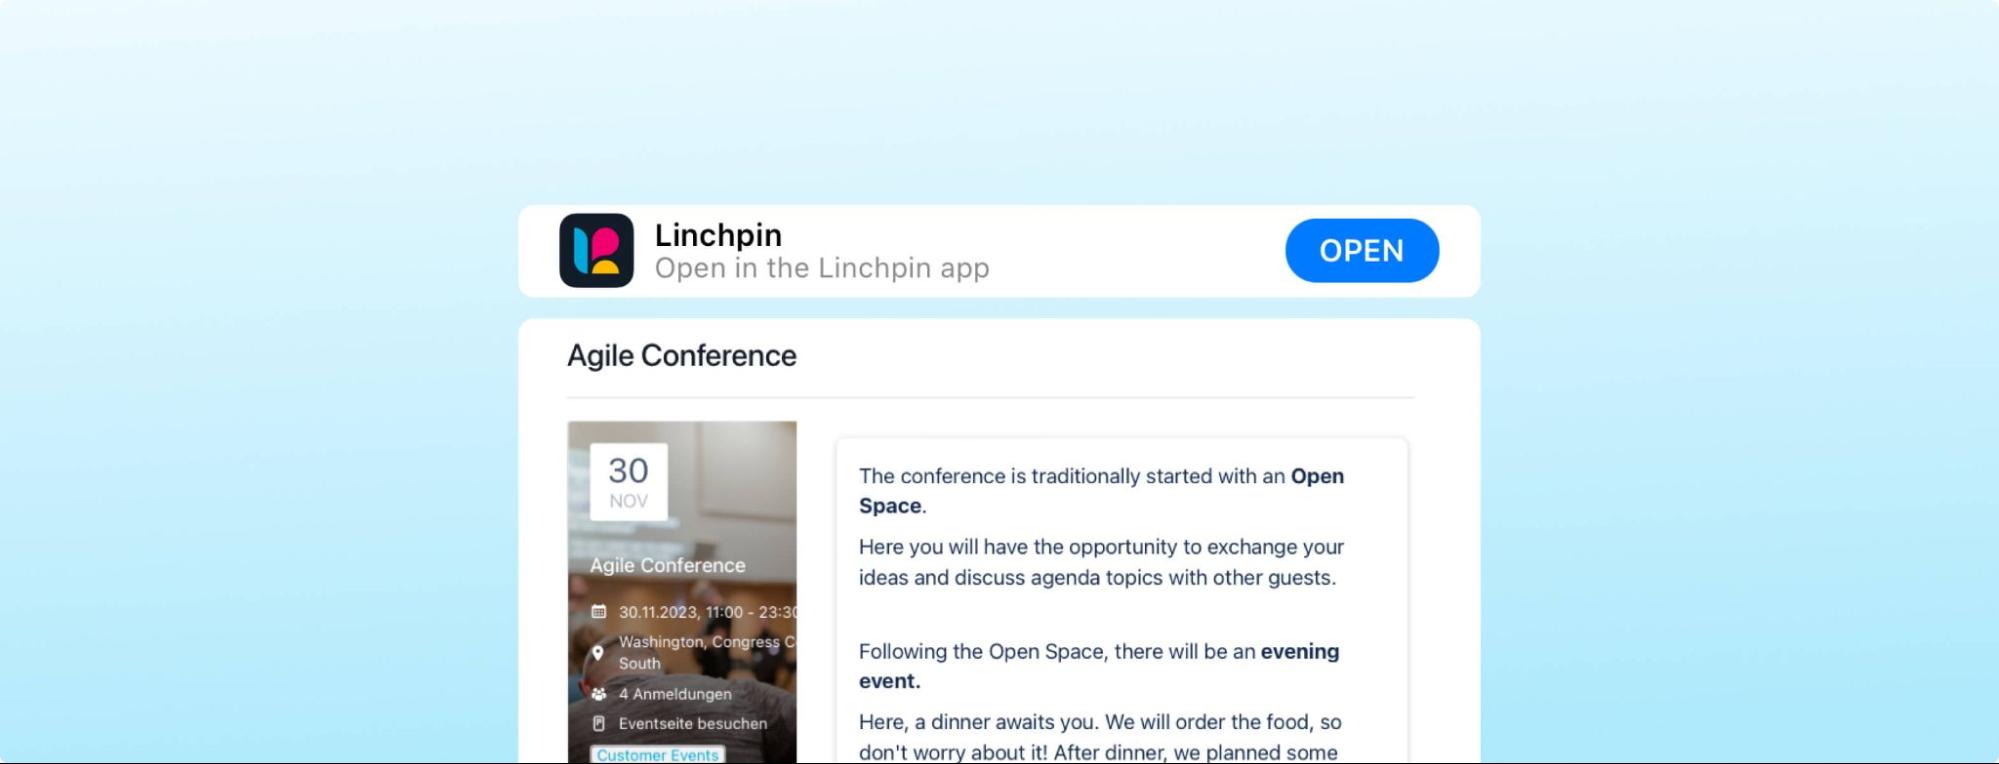 Abb. 2 Linchpin Intranet Update - Links mobil direkt in der App öffnen, mobiles Intranet